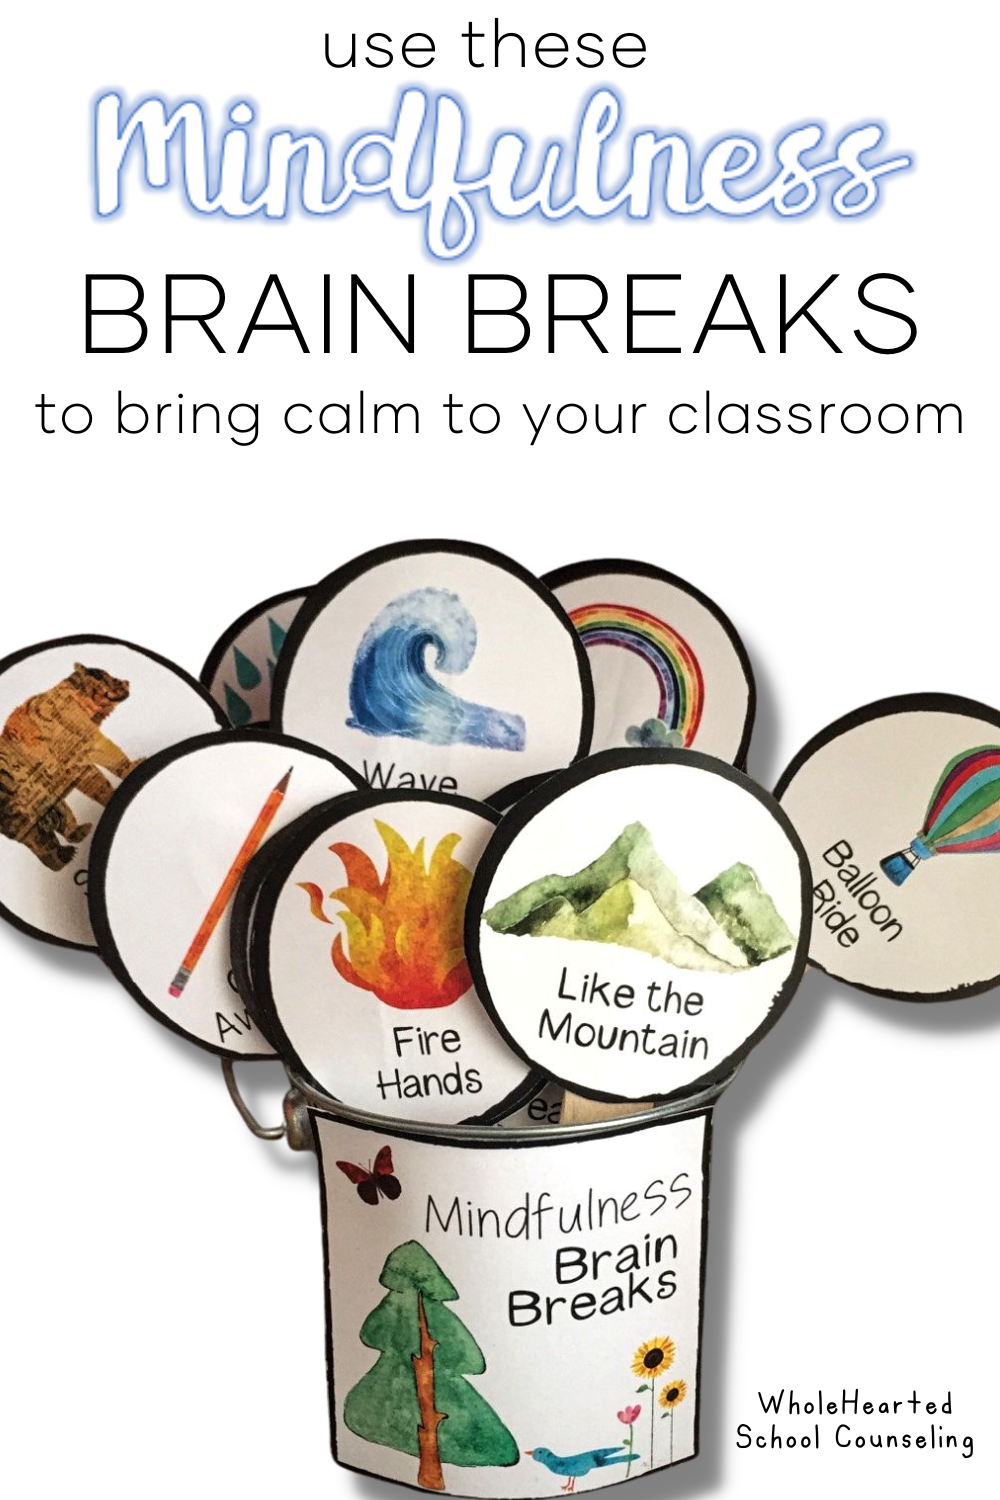 Mindfulness Brain Breaks